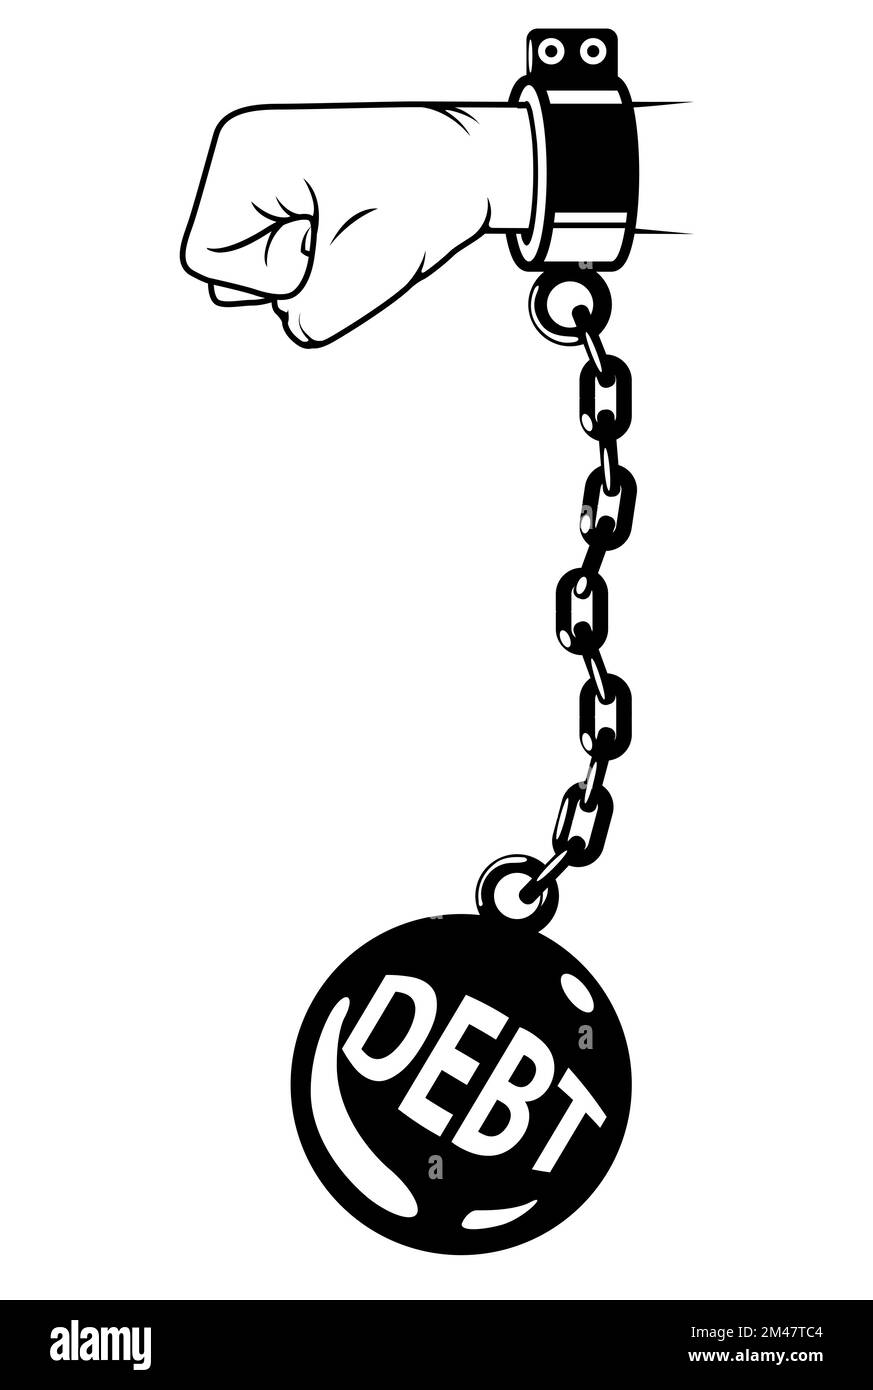 Debt shackles, weight metal ball with chain on wrist, prisoner fetter, debtor encumbrance concept , vector Stock Vector